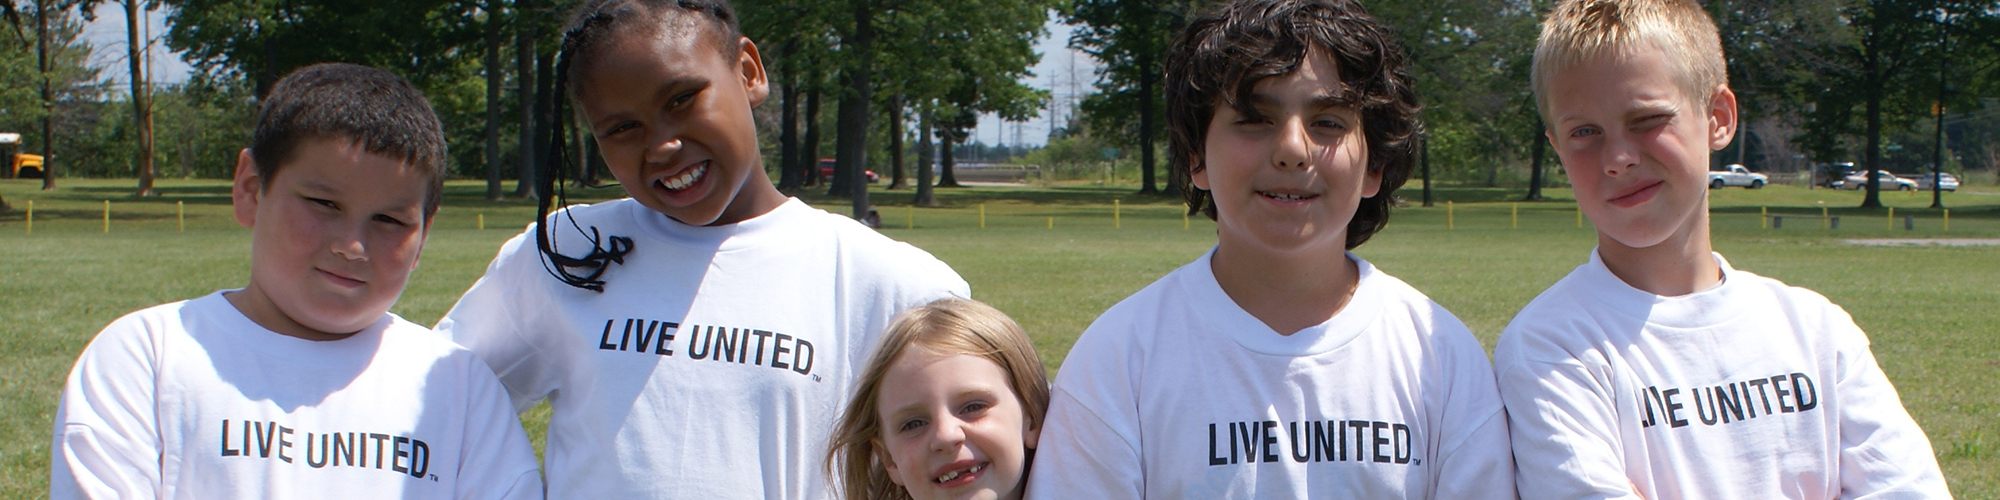 Five children wearing white Live United tshirts